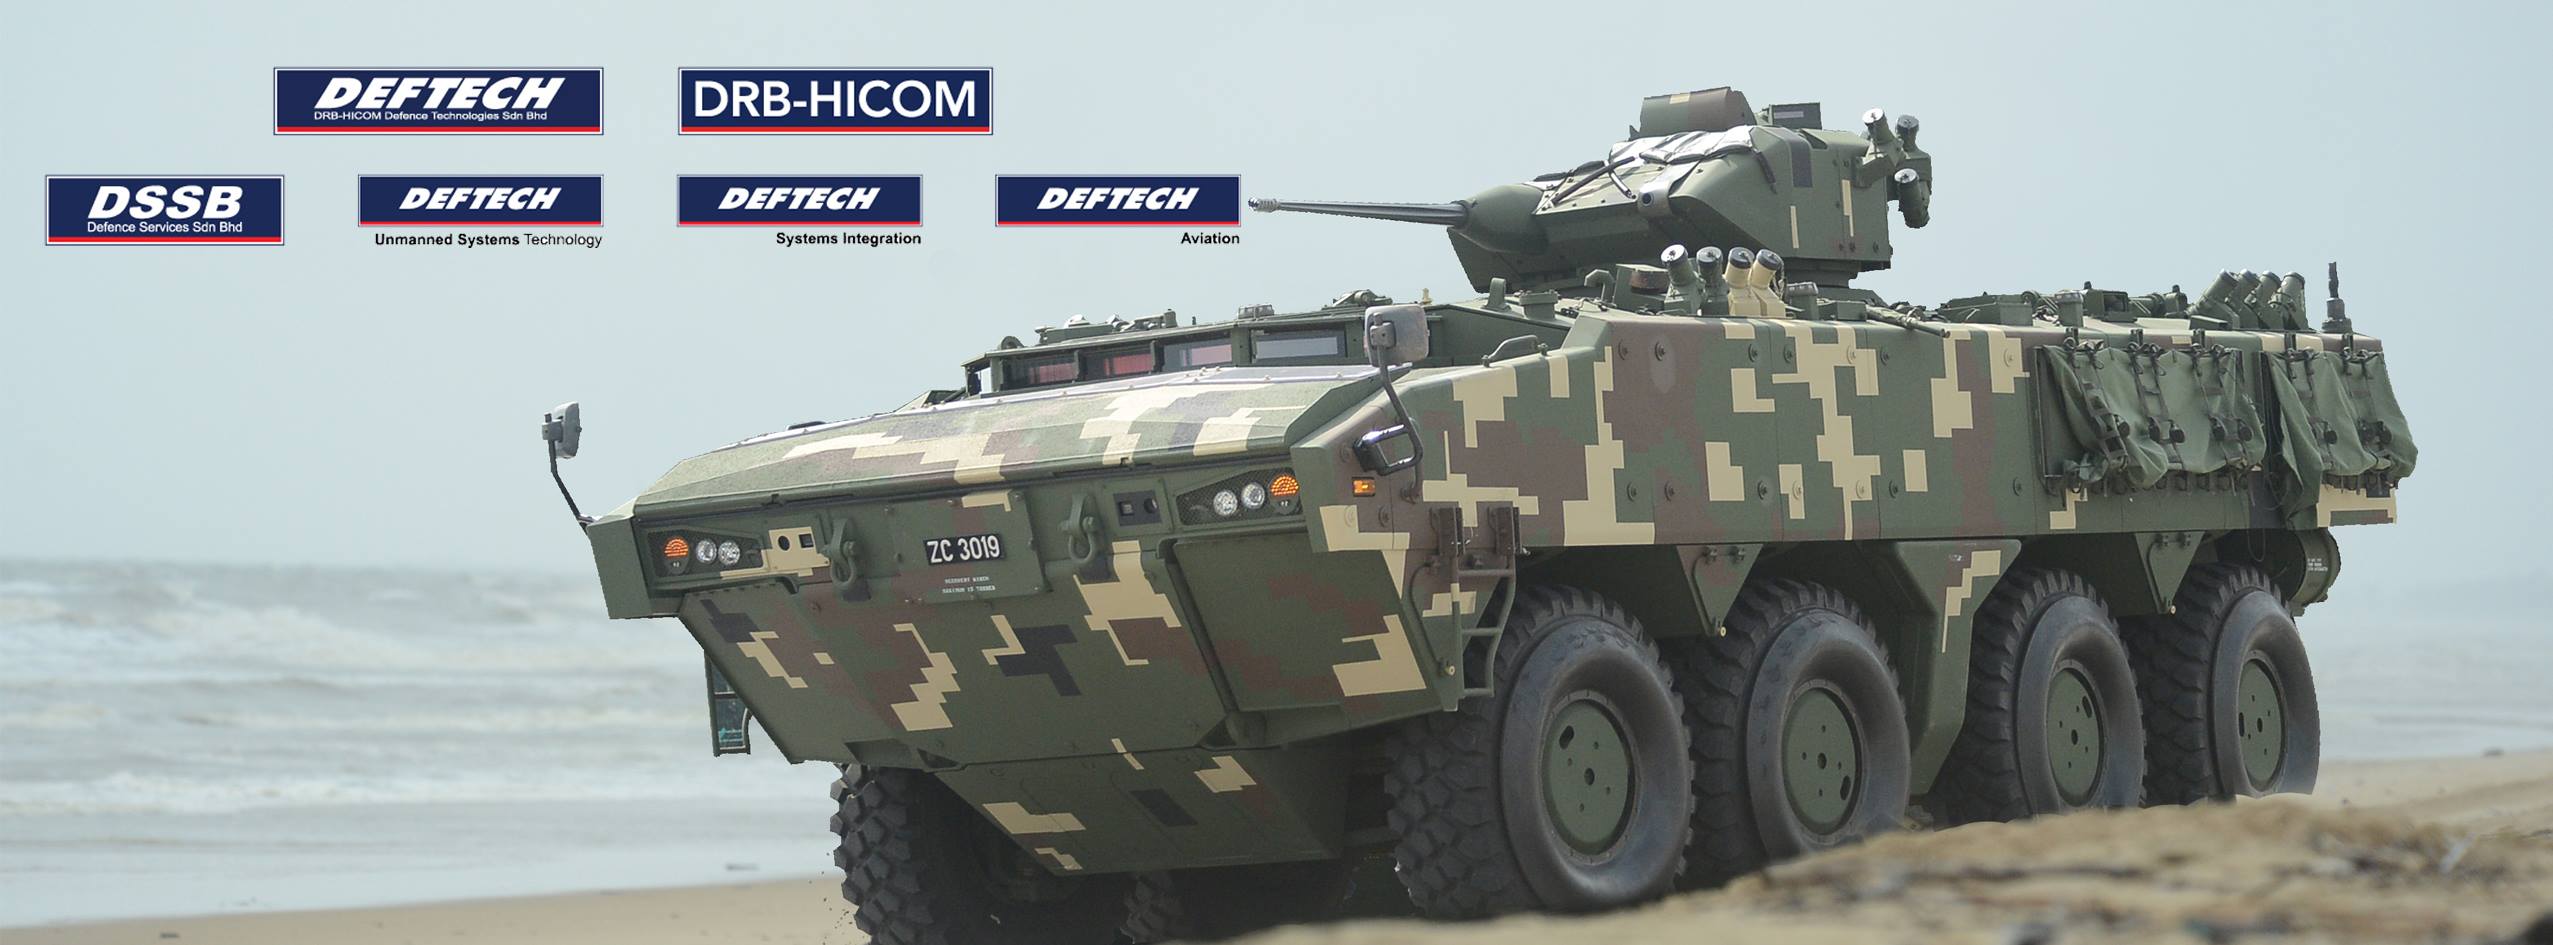 DEFTECH - DRB-HICOM Defence Technologies Sdn. Bhd